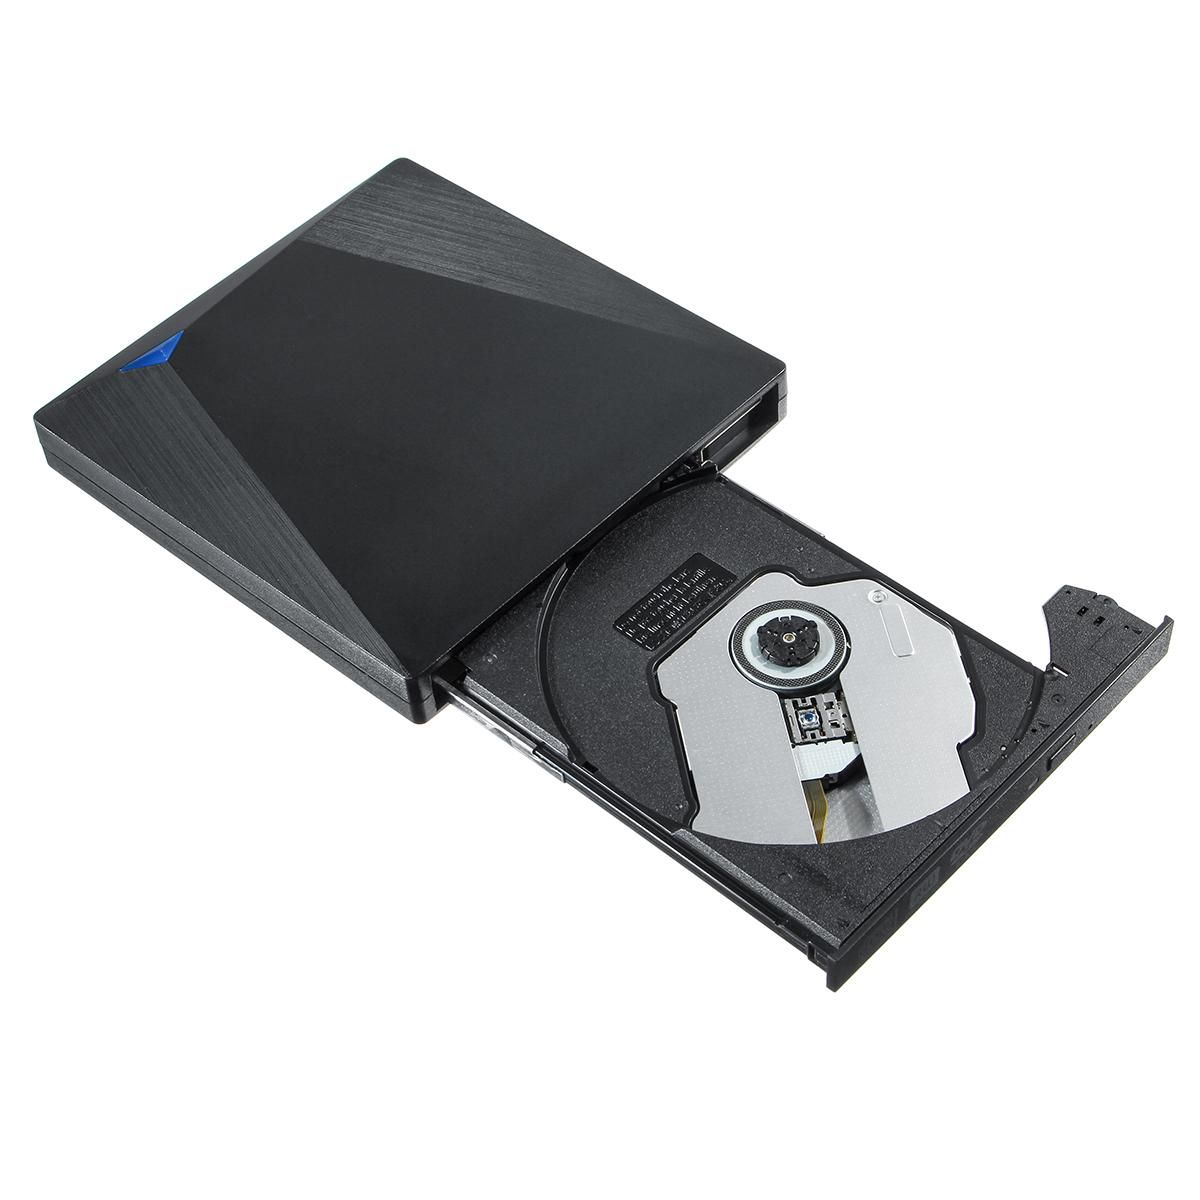 Type-C-USB-30-External-DVD-Burner-Writer-Recorder-Player-DVD-RW-Optical-Drive-CDDVD-ROM-Player-for-L-1710613